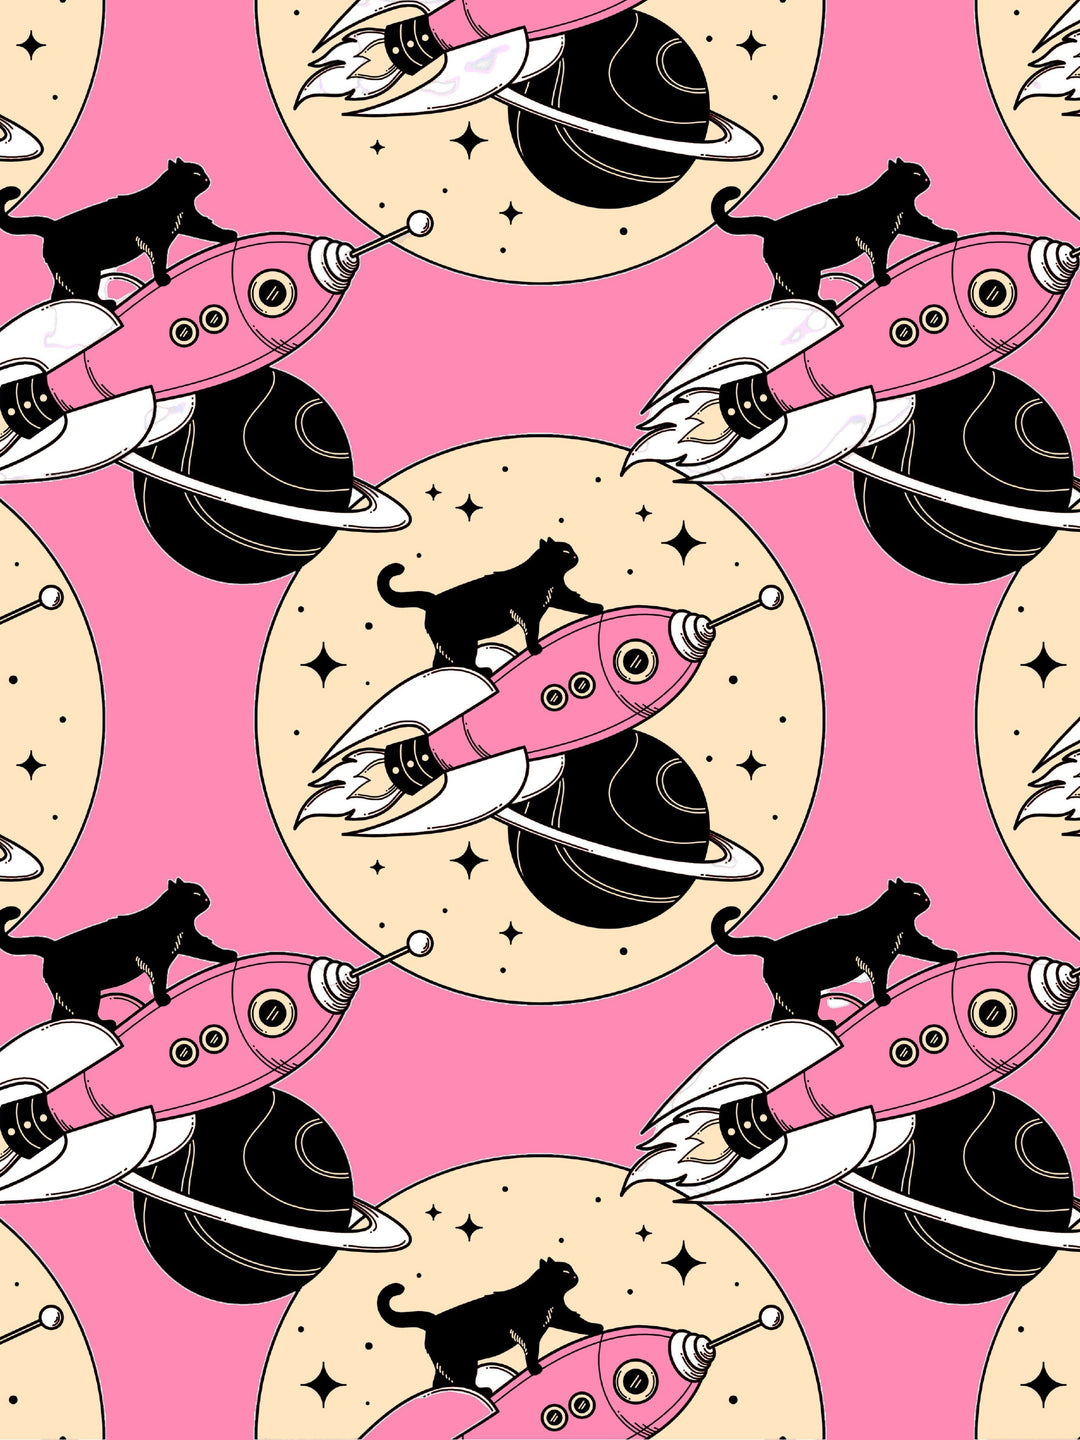 Cosmic Kitties Pink Women's Long Sleeve Satin Pyjamas Set